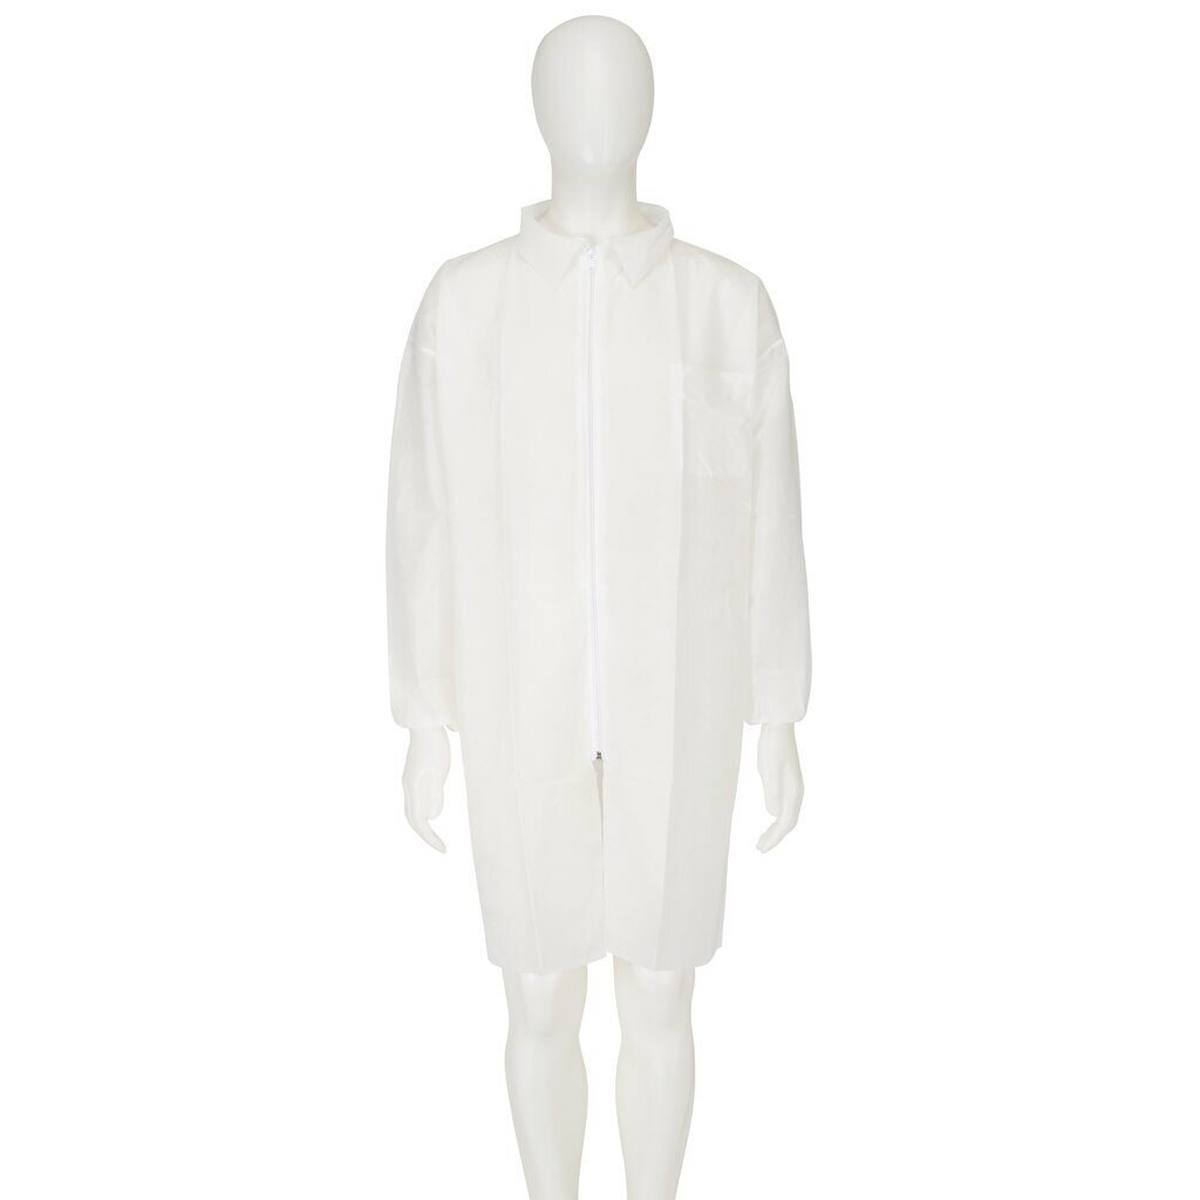 3M 4400 Abrigo, blanco, talla XL, material 100% polipropileno, transpirable, muy ligero, con cremallera